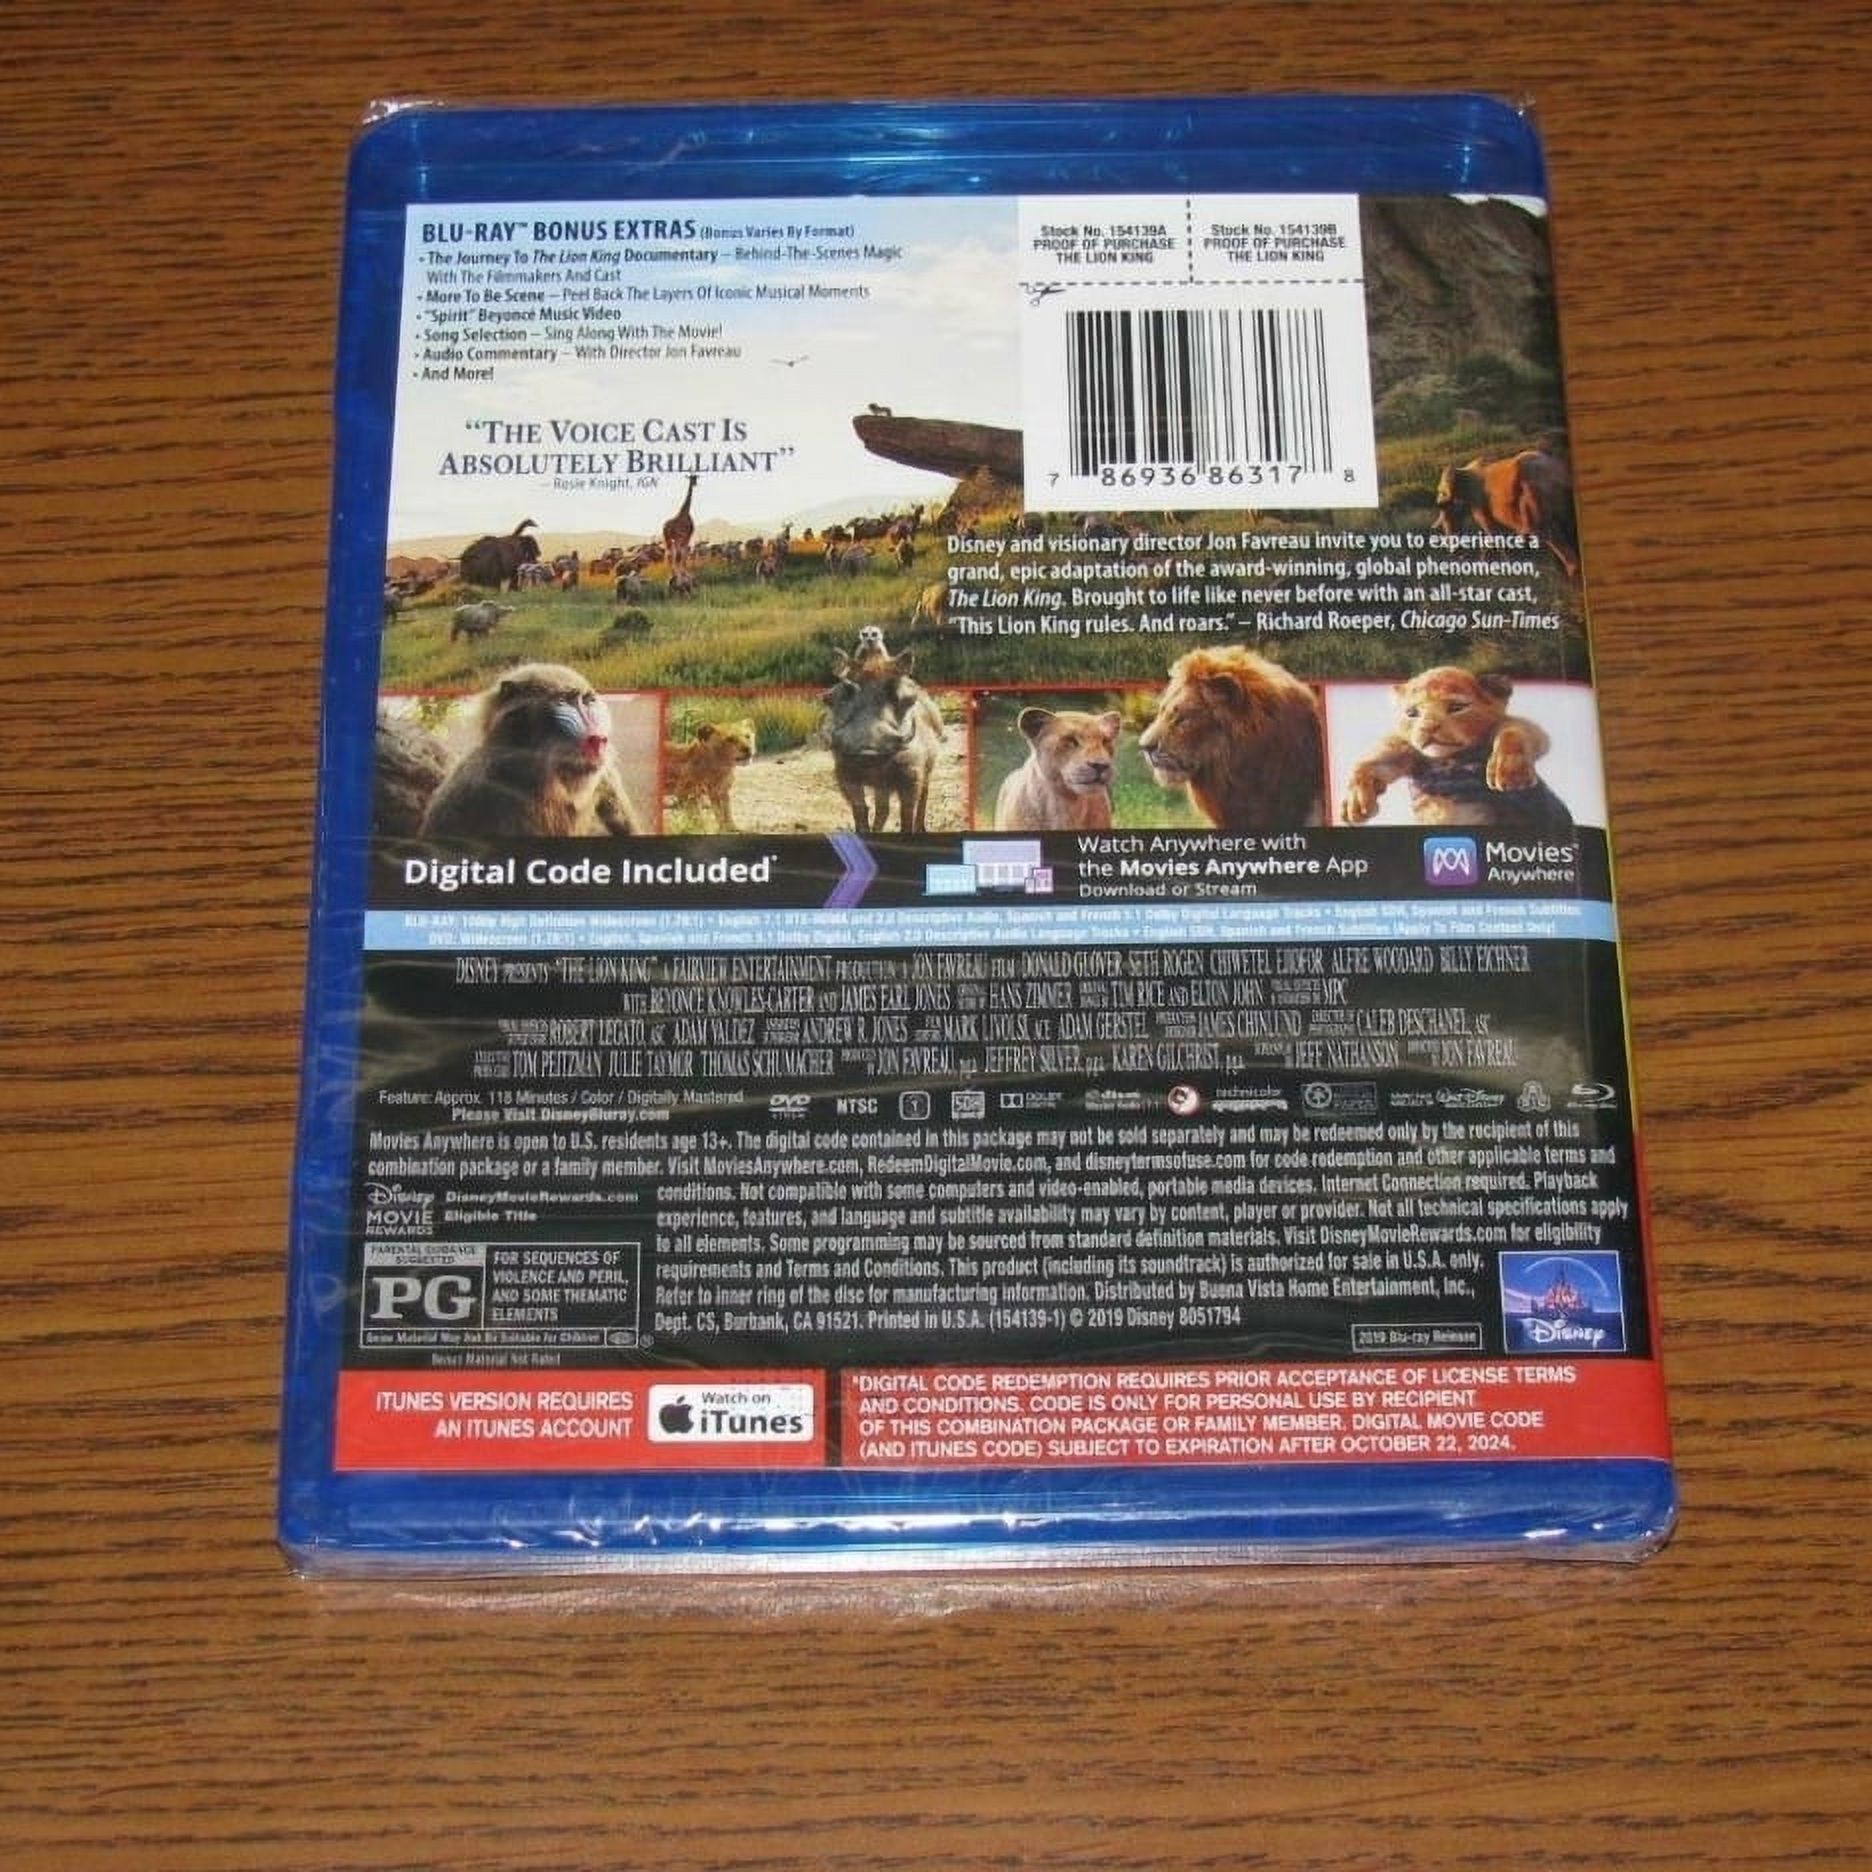 The Lion King 2019 (Blu-ray + DVD + Digital Copy) - image 4 of 6